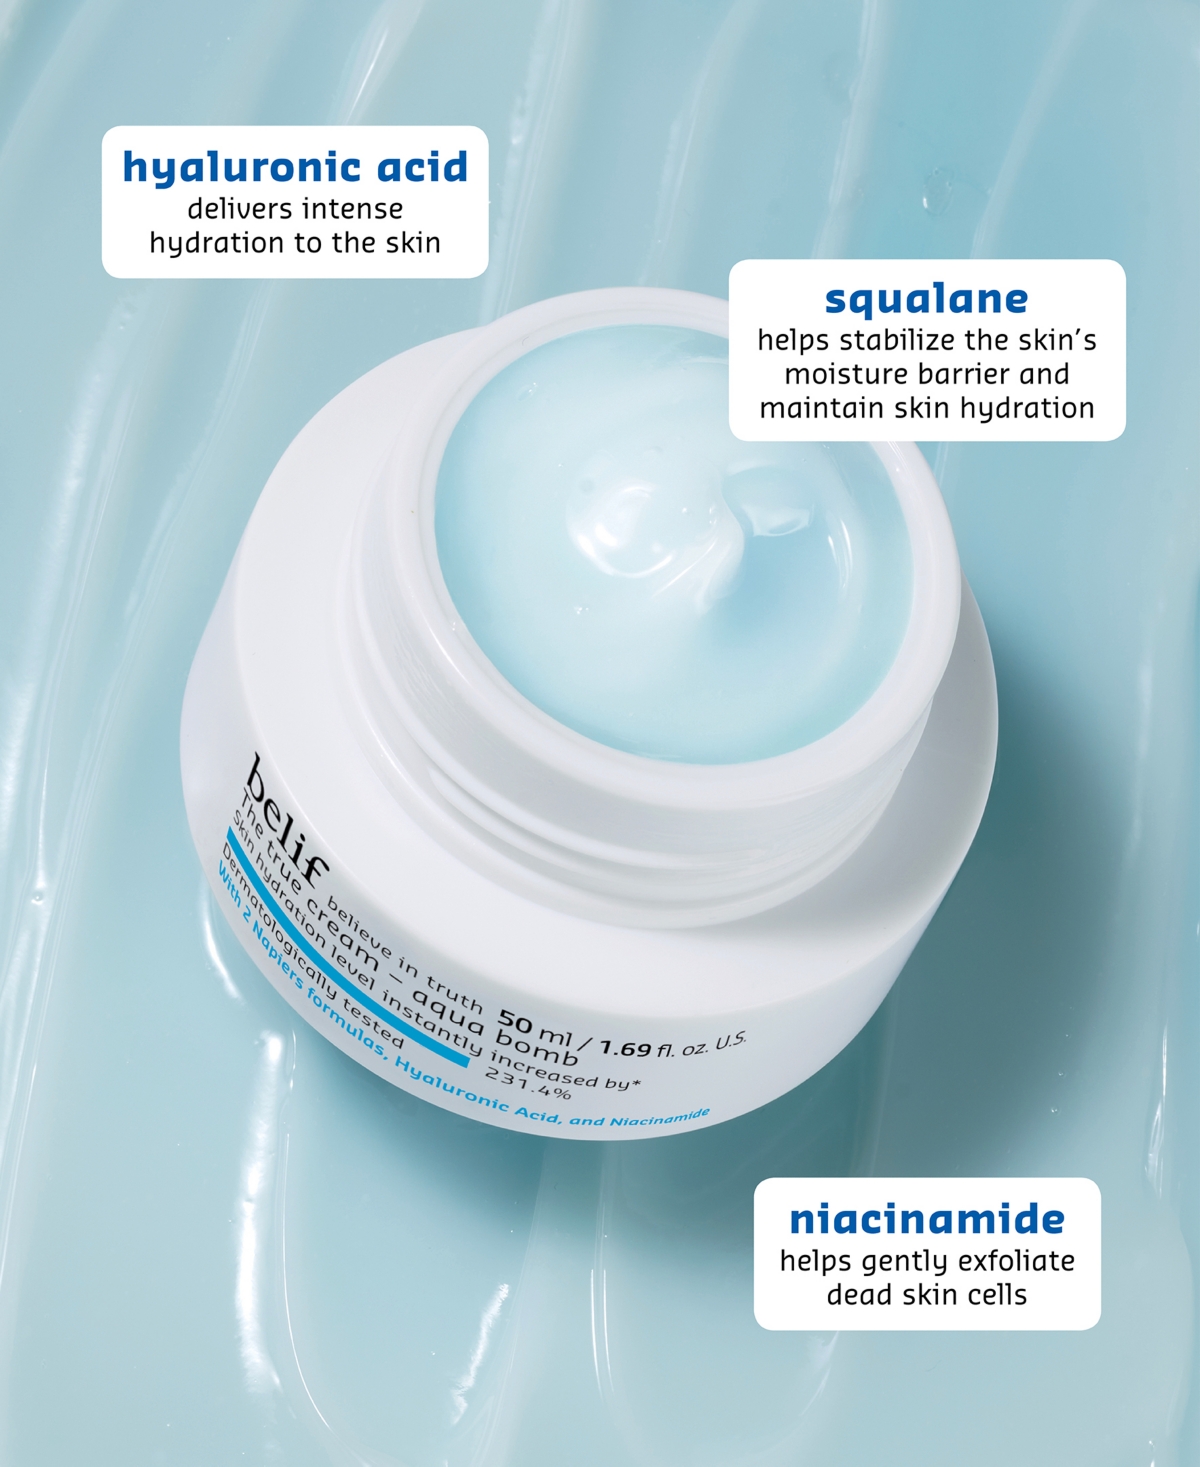 Shop Belif The True Cream Aqua Bomb With Hyaluronic Acid, Niacinamide & Squalane, 1.69 Oz. In No Color